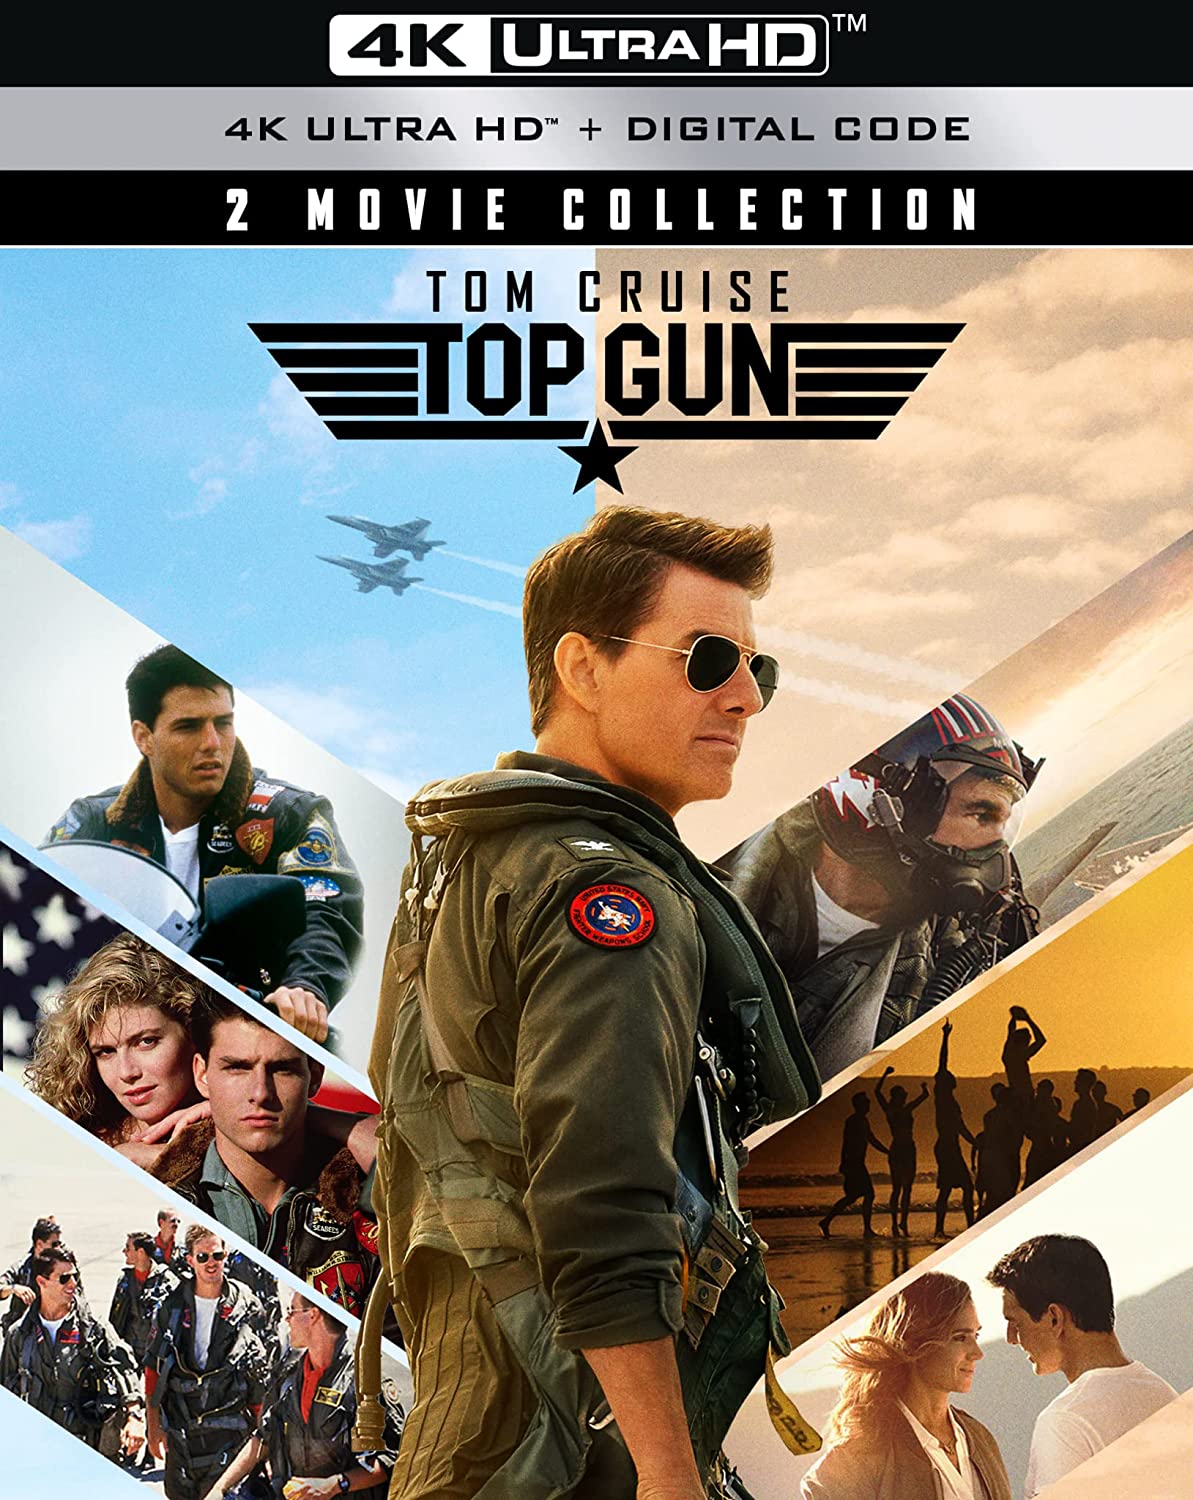 Top Gun 2 Movie 4k Blu-ray Collection